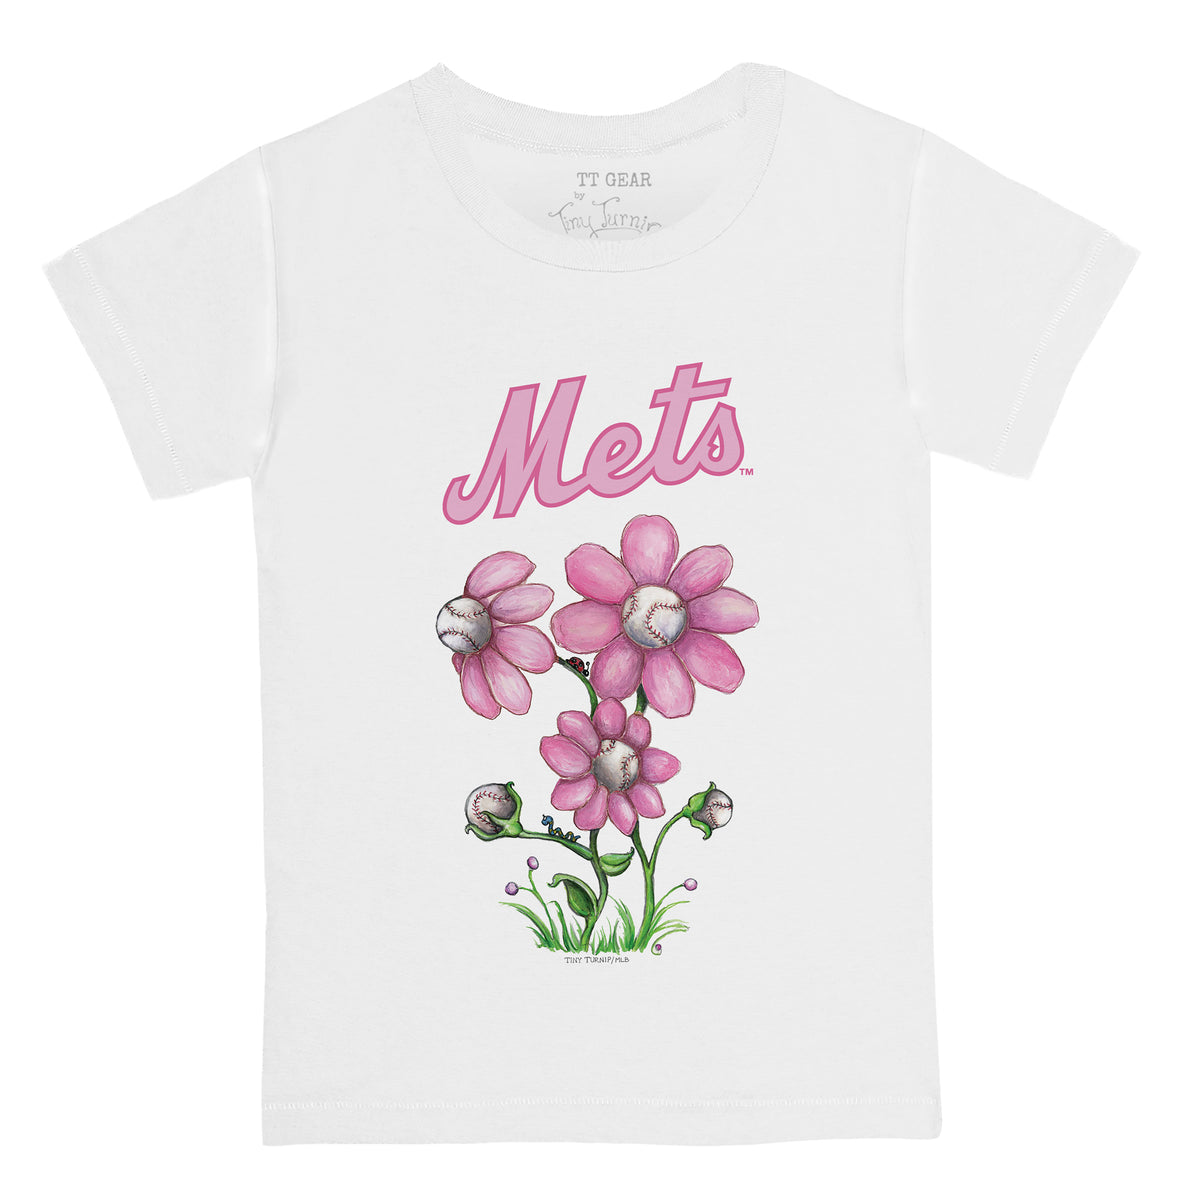 New York Mets Blooming Baseballs Tee Shirt